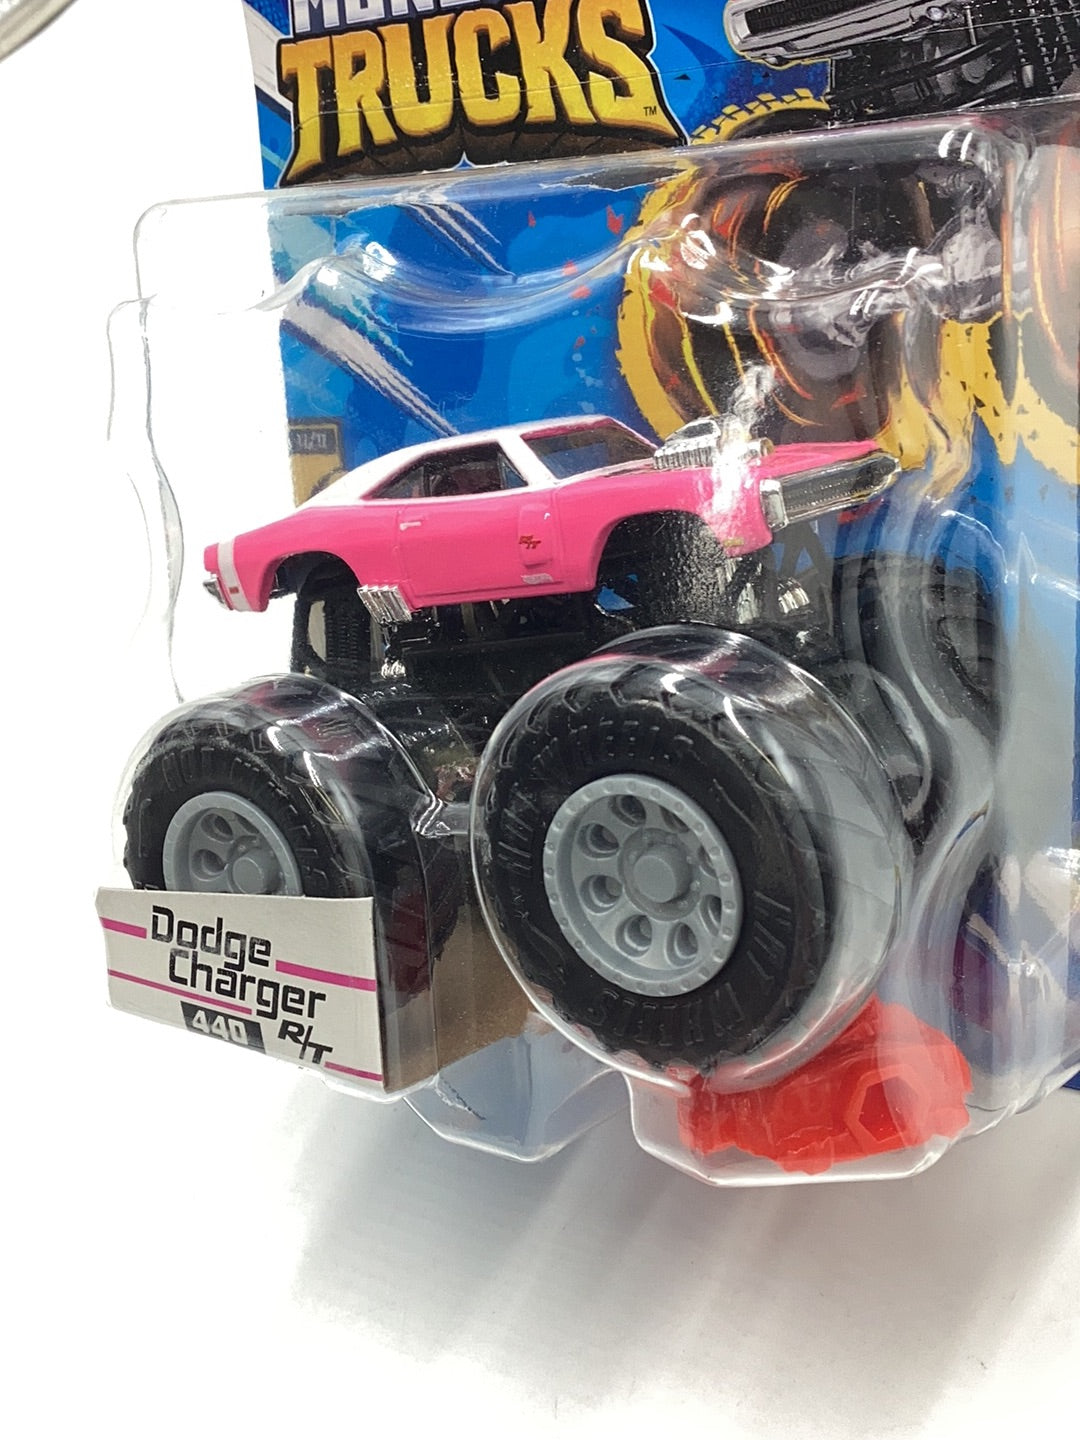 2023 Hot wheels monster Trucks Dodge Charger r/t 440 pink 133E